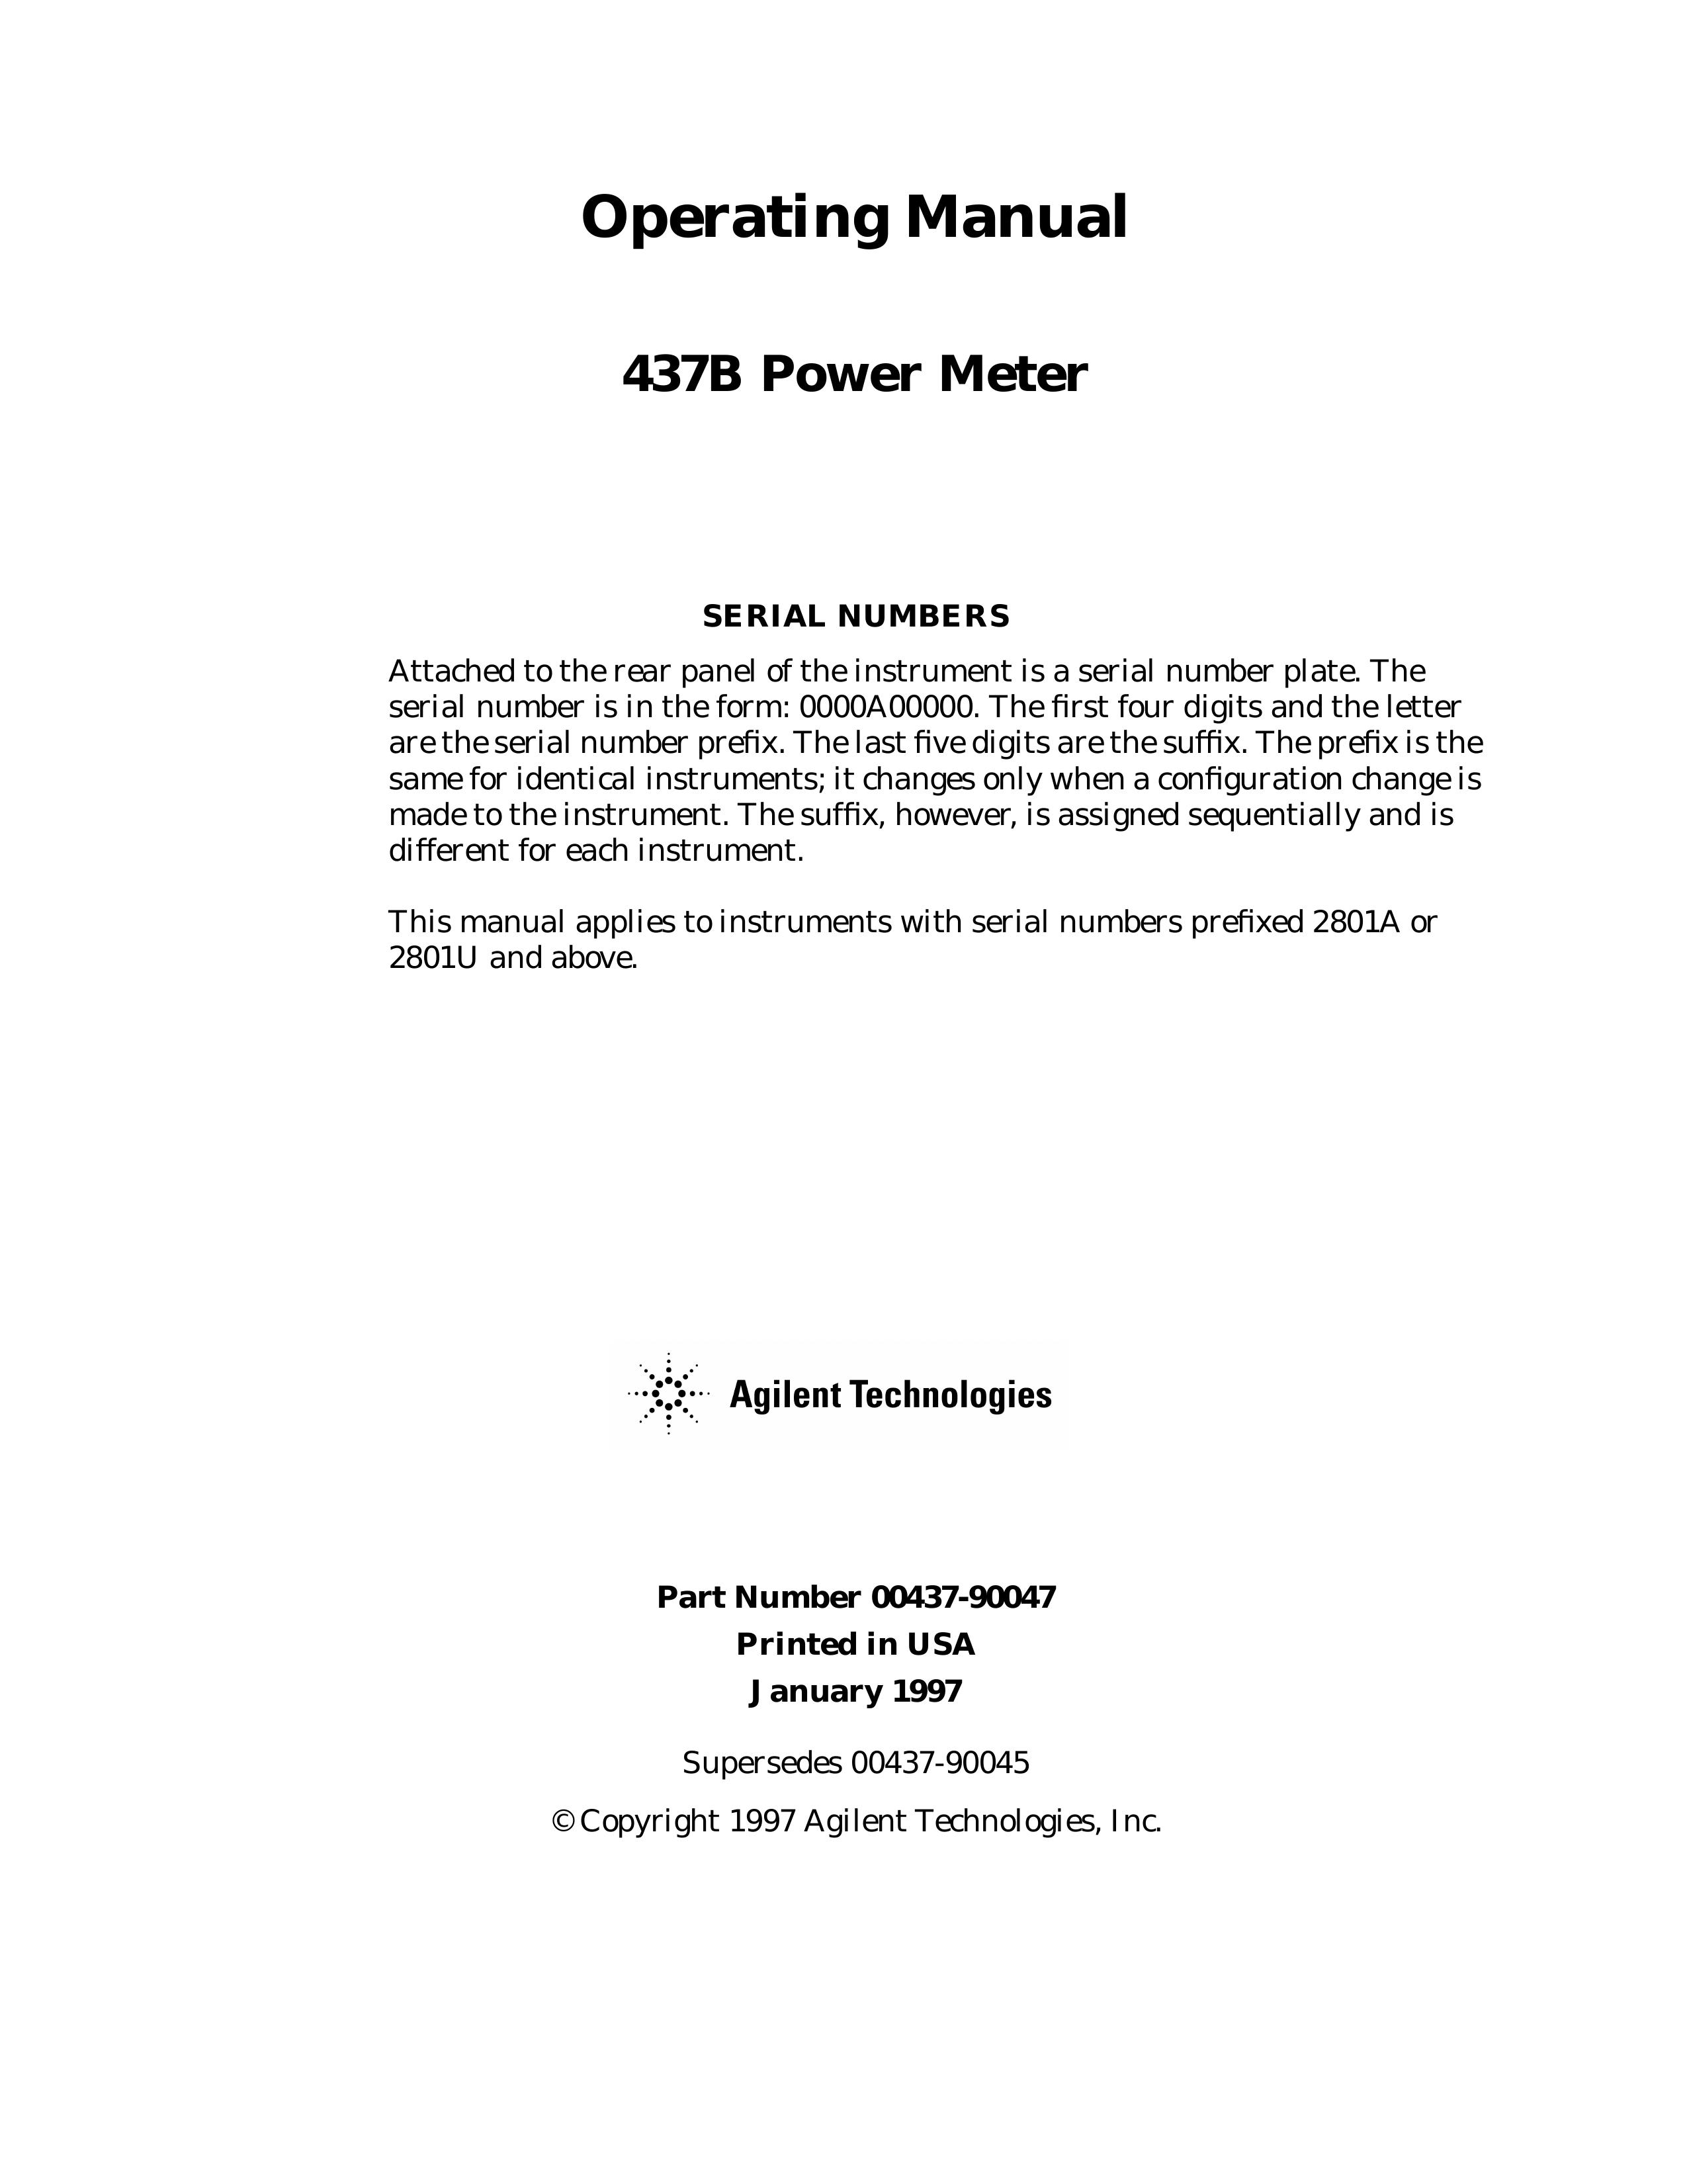 Agilent Technologies 437B Yard Vacuum User Manual